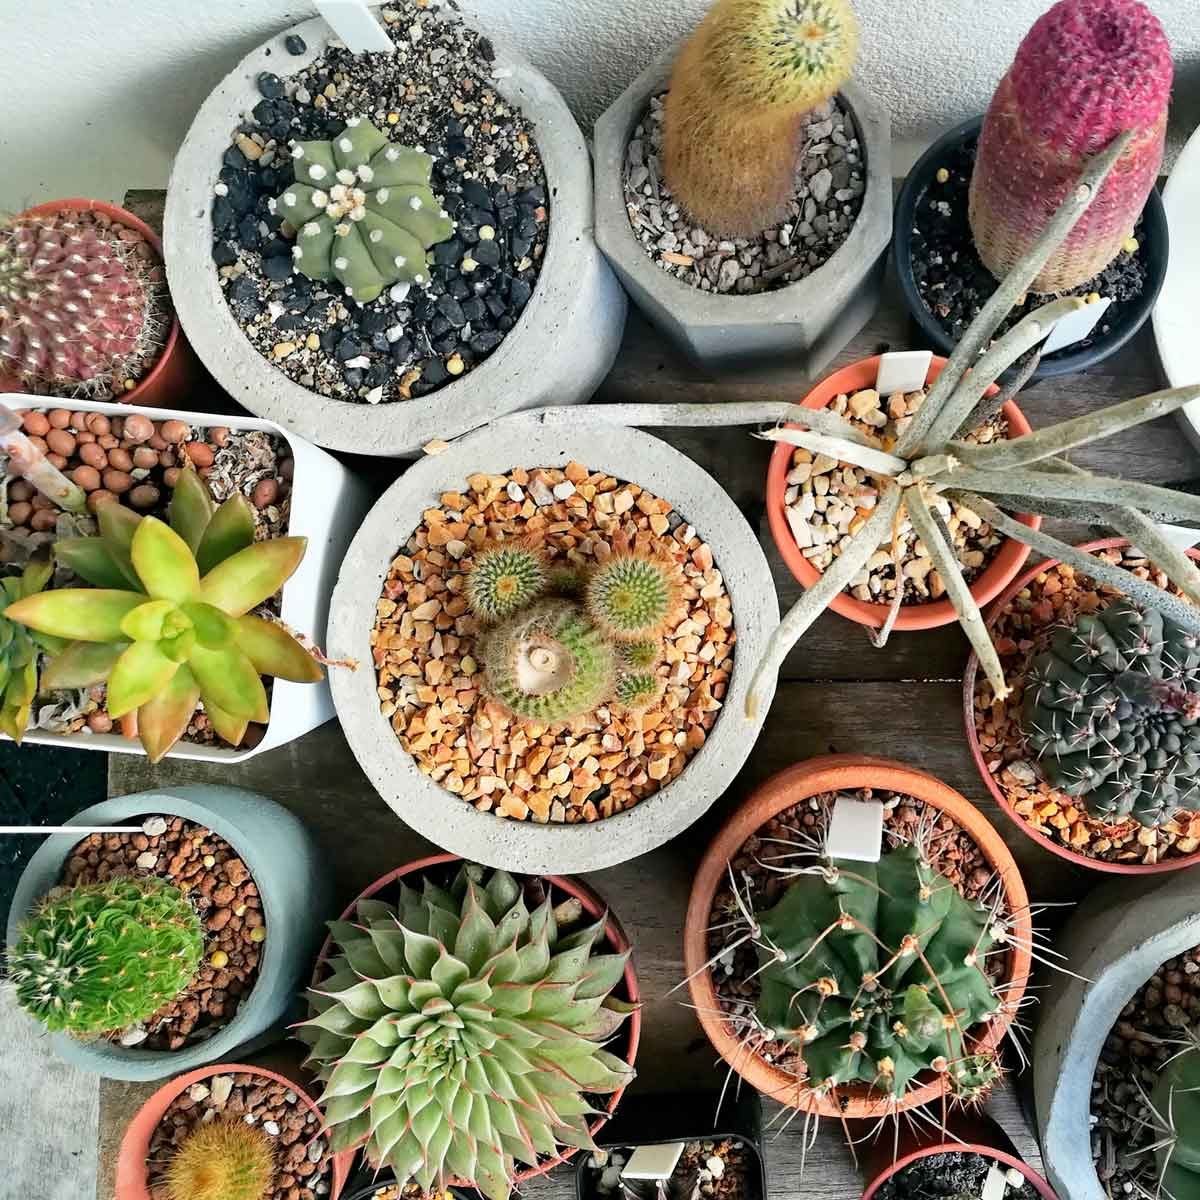 8 Easy Types of Cactus for Beginner Gardeners to Grow